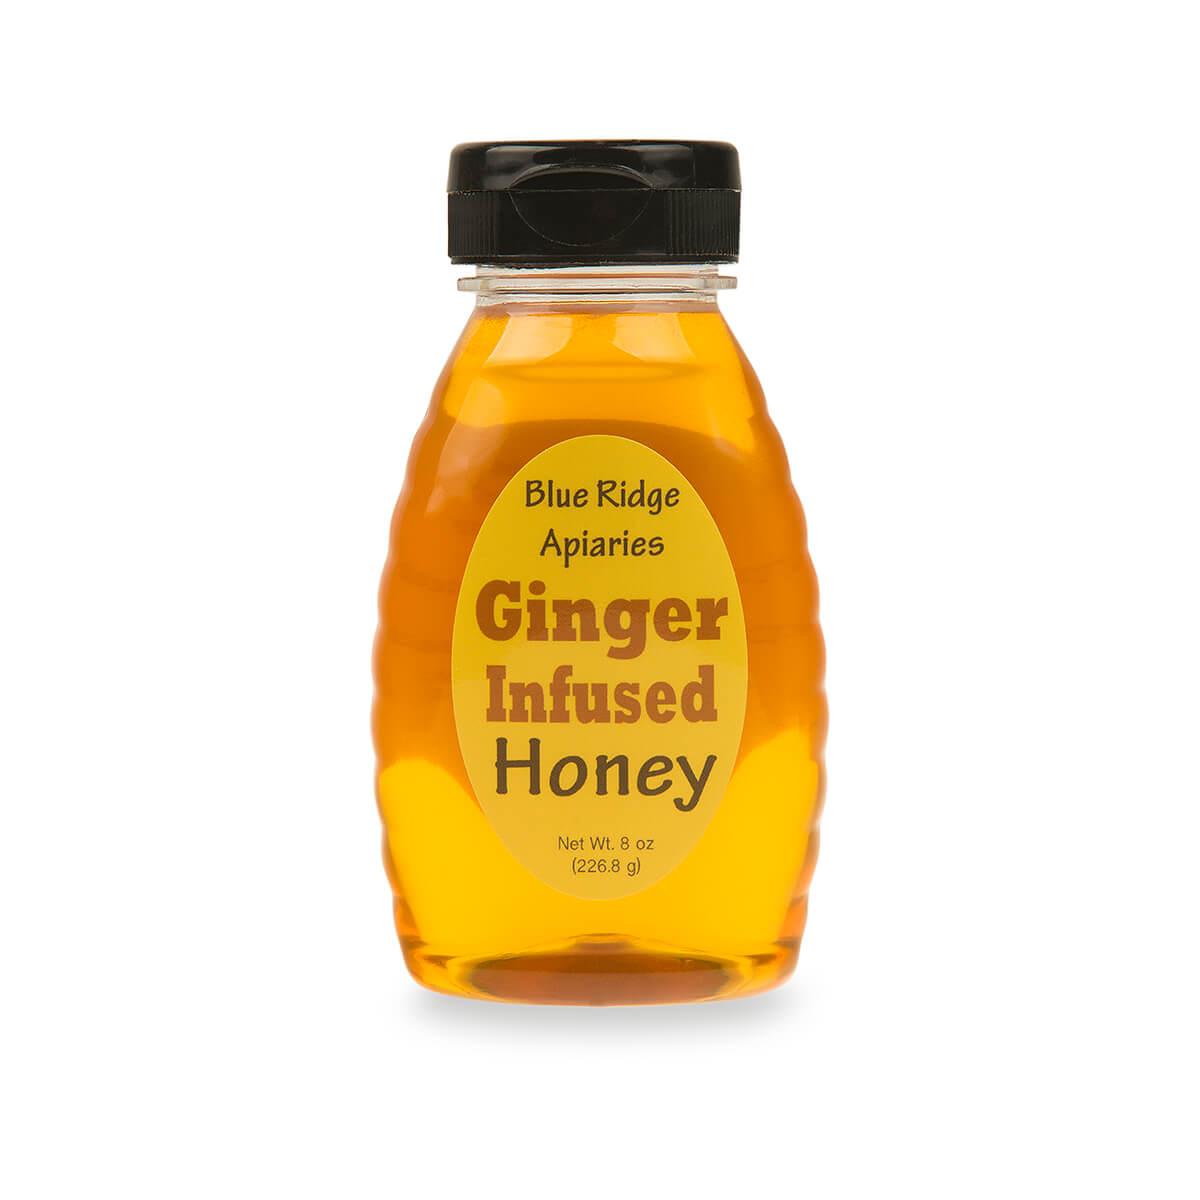  Ginger Infused Honey